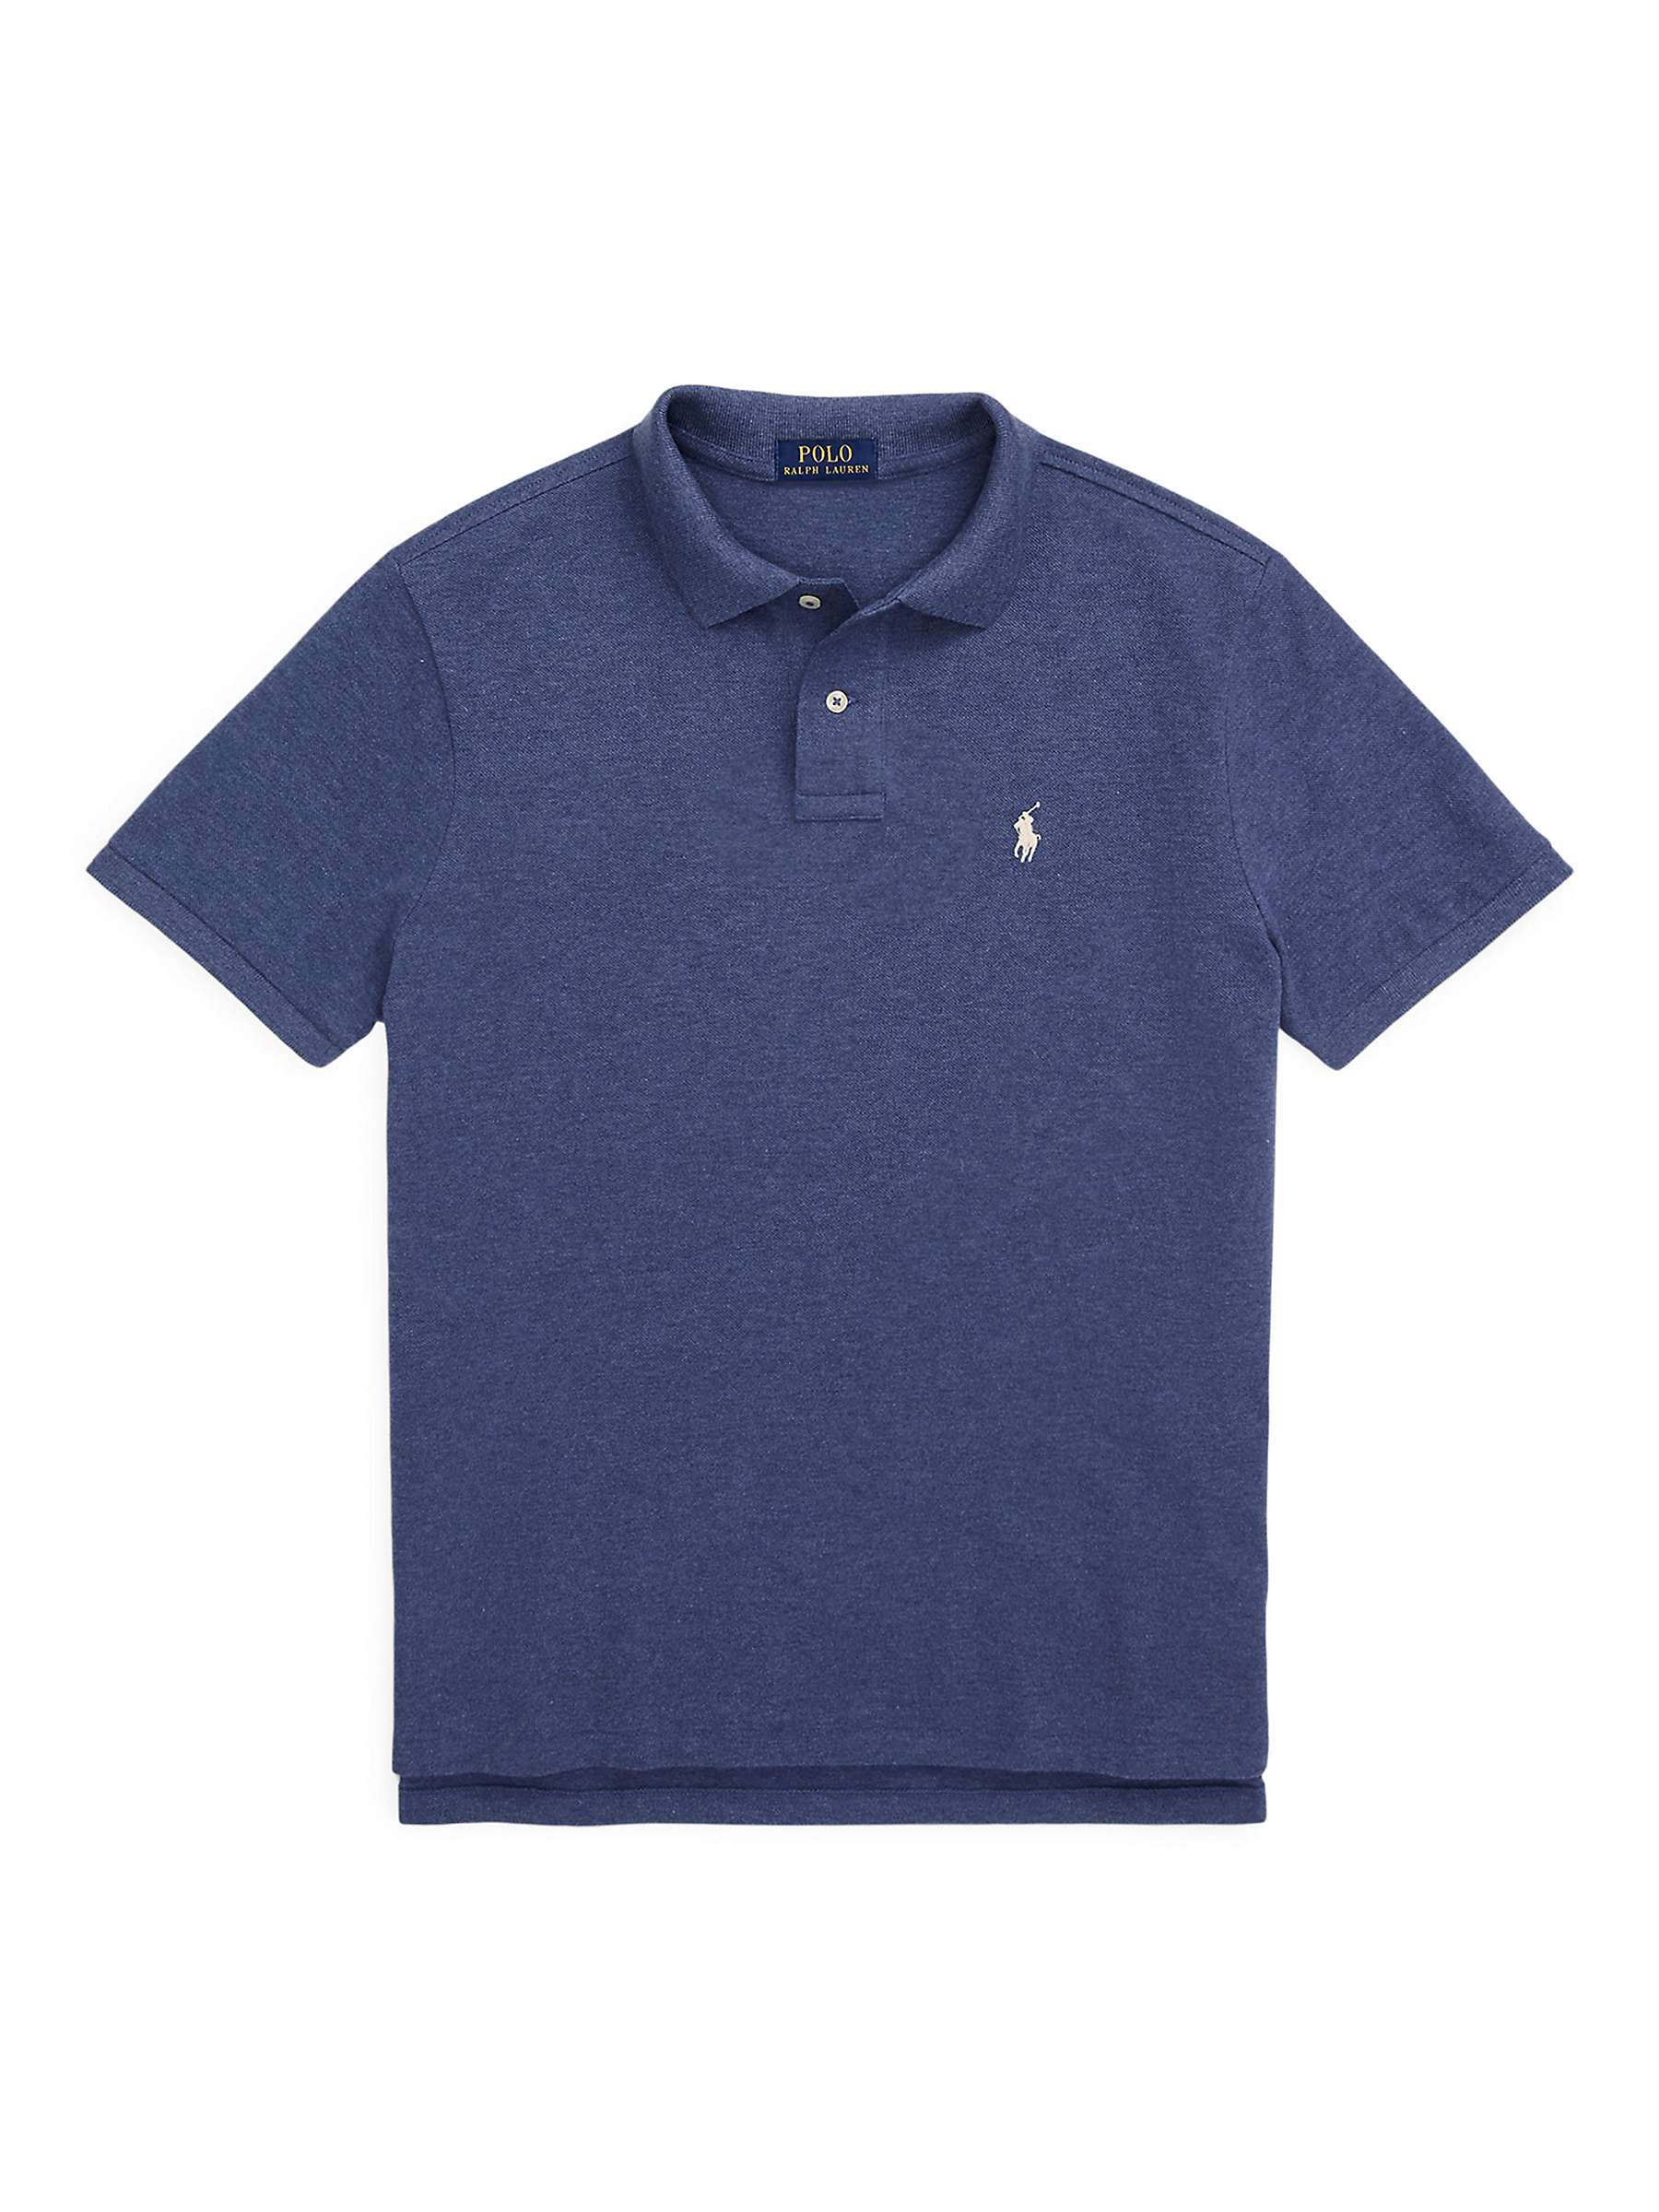 Buy Polo Ralph Lauren Slim Fit Mesh Polo Shirt, Blue Online at johnlewis.com